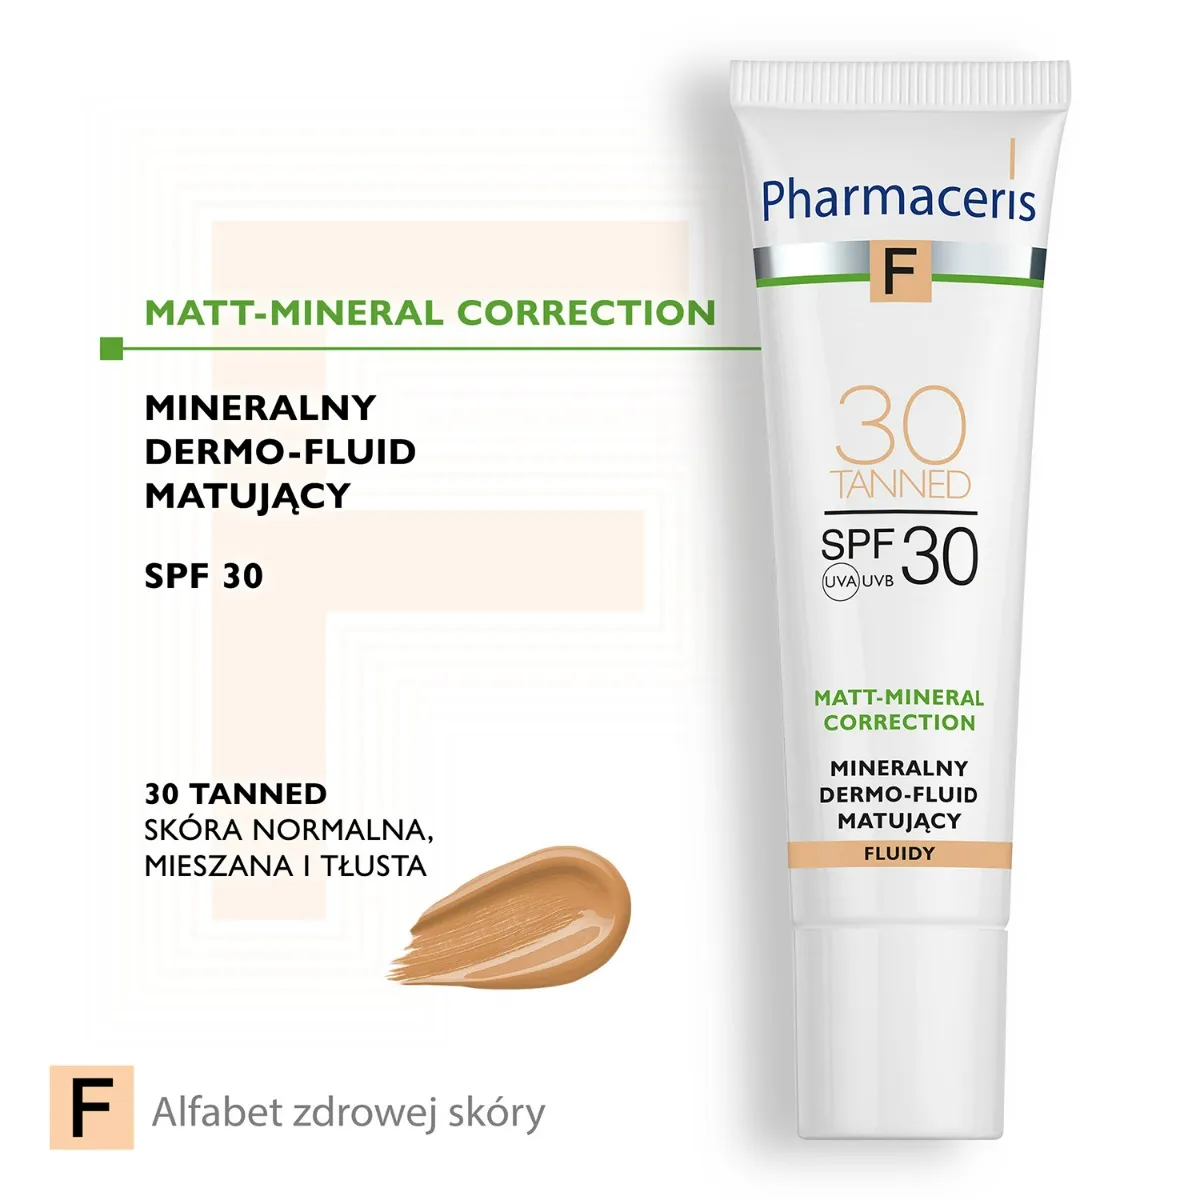 Pharmaceris F Matt-Mineral-Correction, mineralny dermo-fluid matujący, Spf 30, tanned 30, 40 ml 